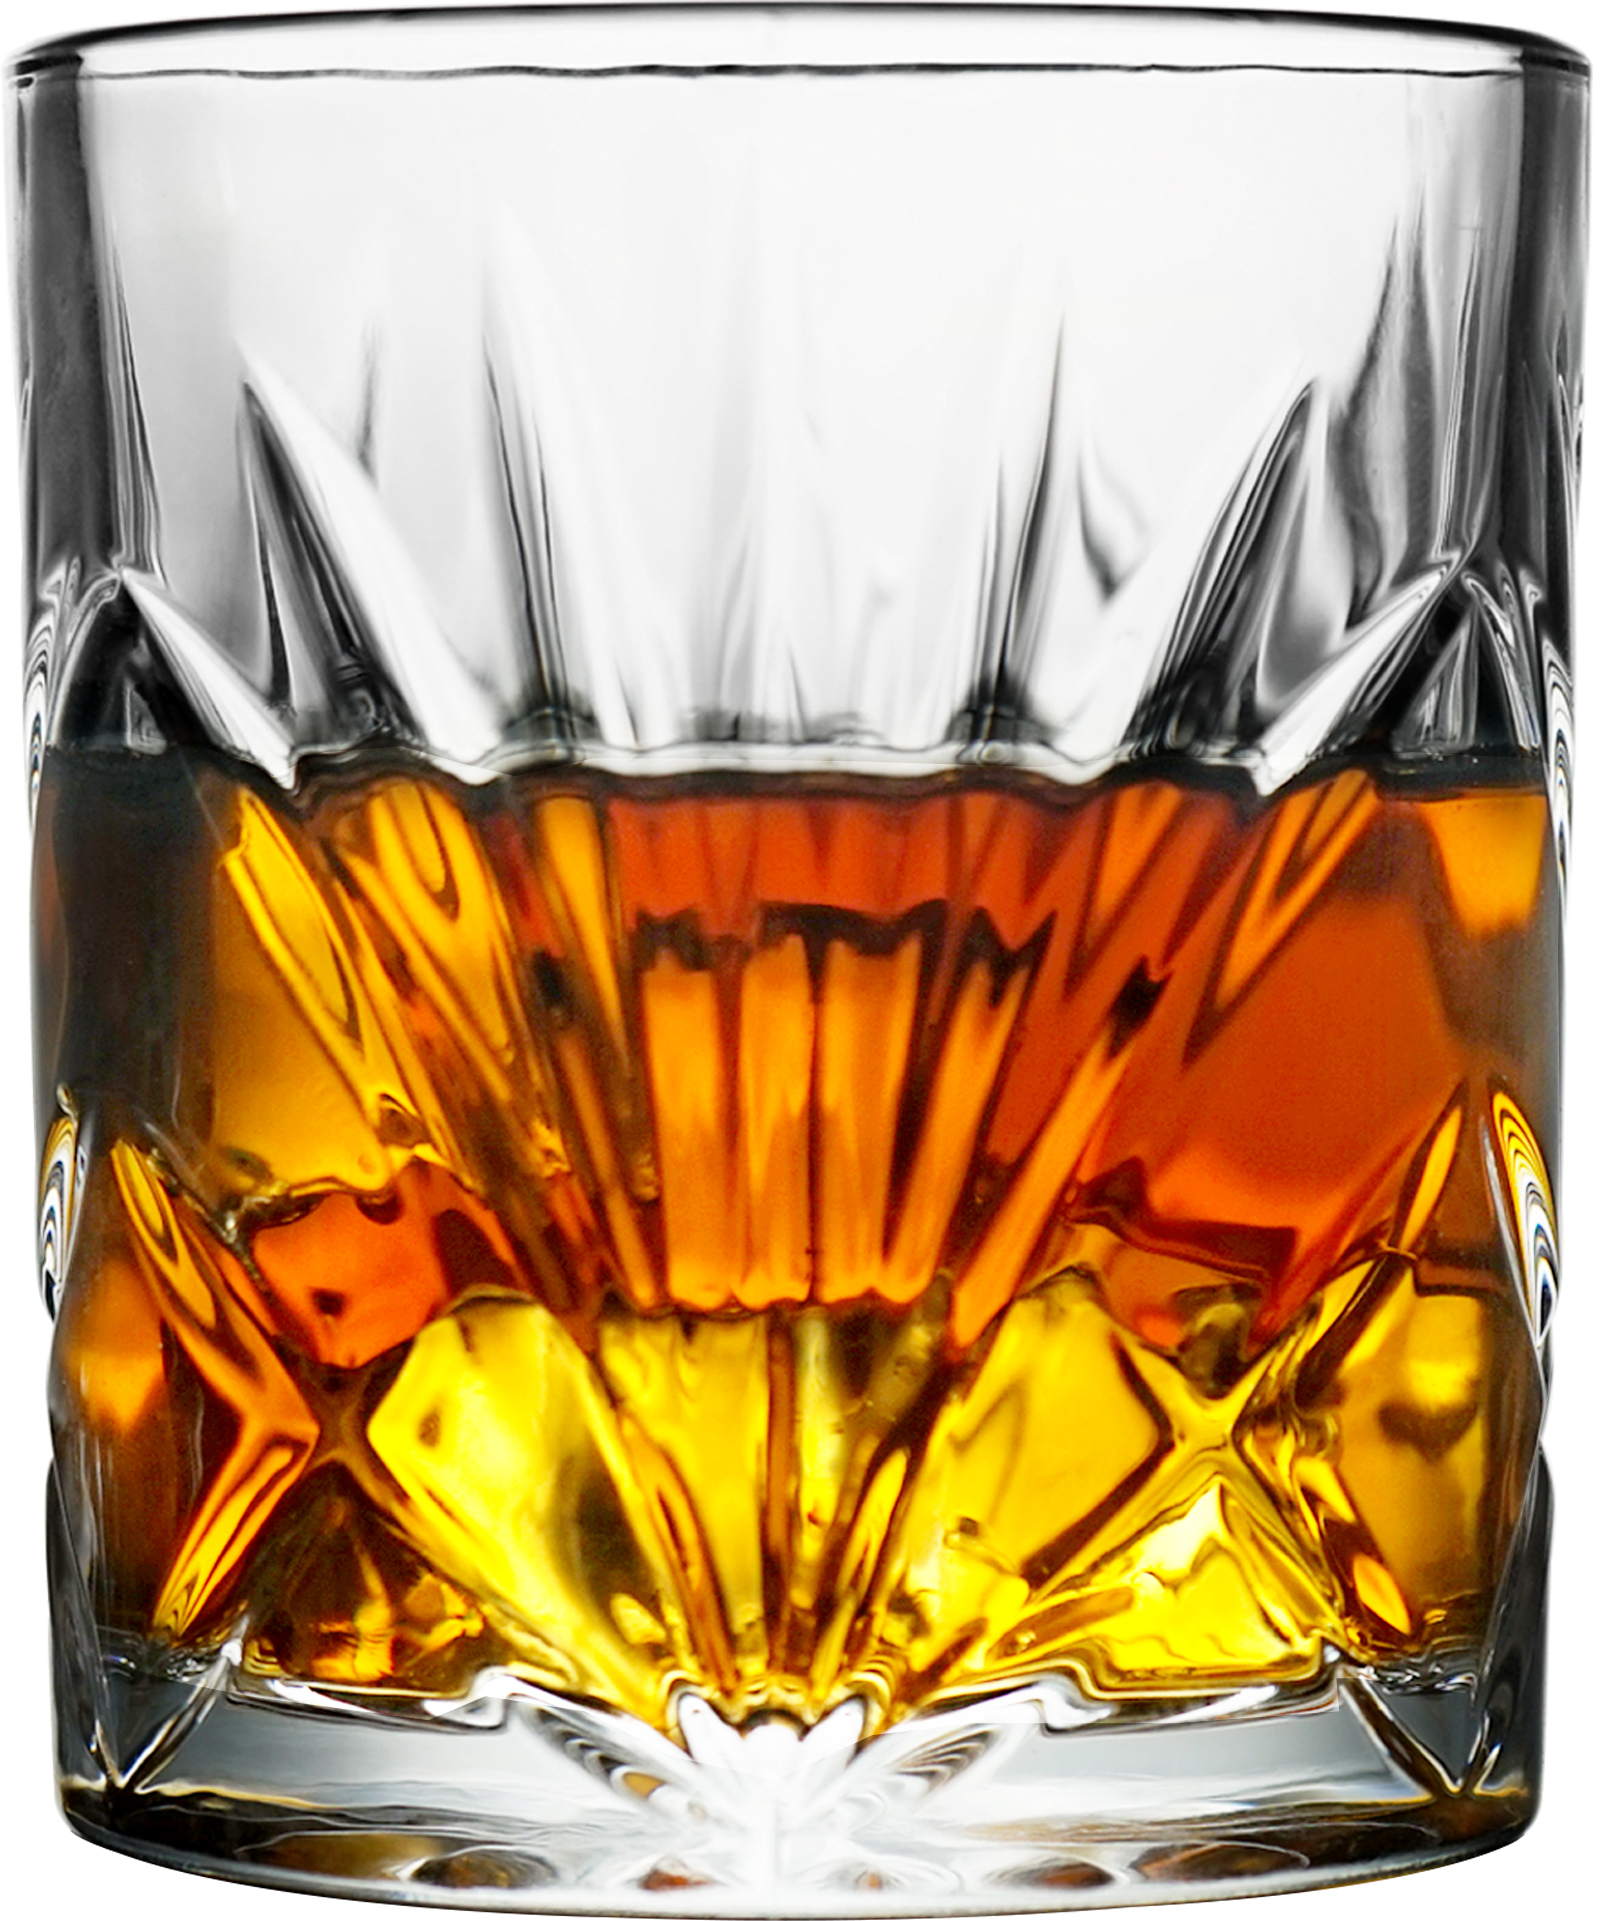 Whiskey Glasses Set of 6, 10oz Old Fashioned Crystal Bourbon Glass Rocks Glass Cocktail Tumbler Glasses Set - image 4 of 10